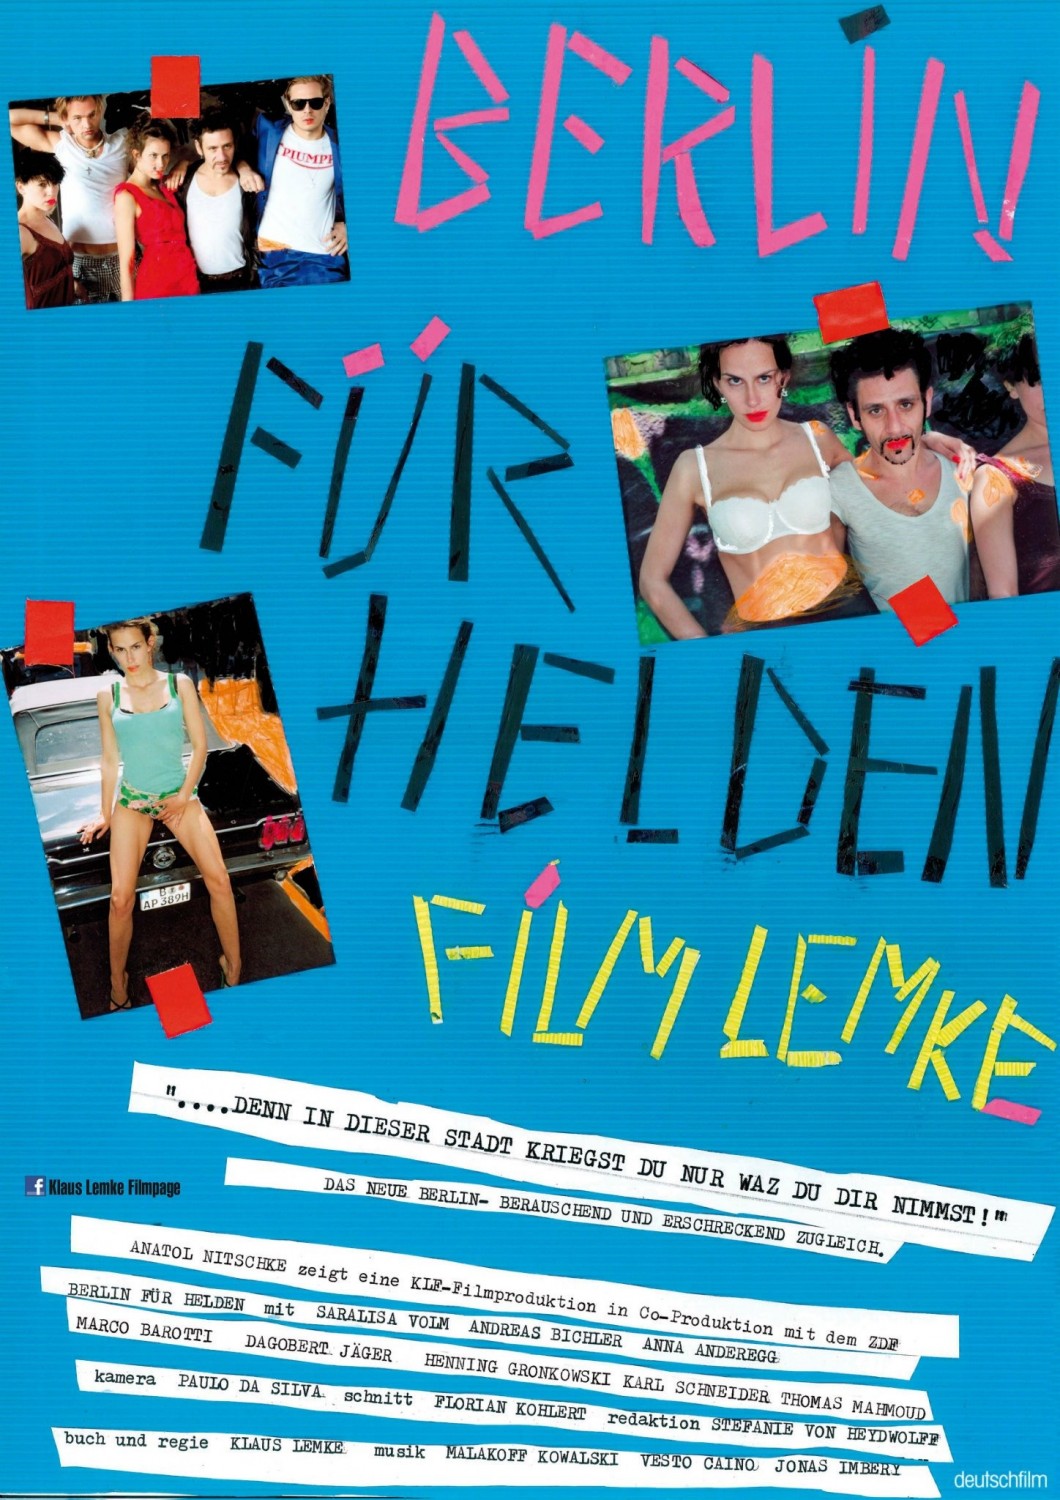 Extra Large Movie Poster Image for Berlin für Helden 